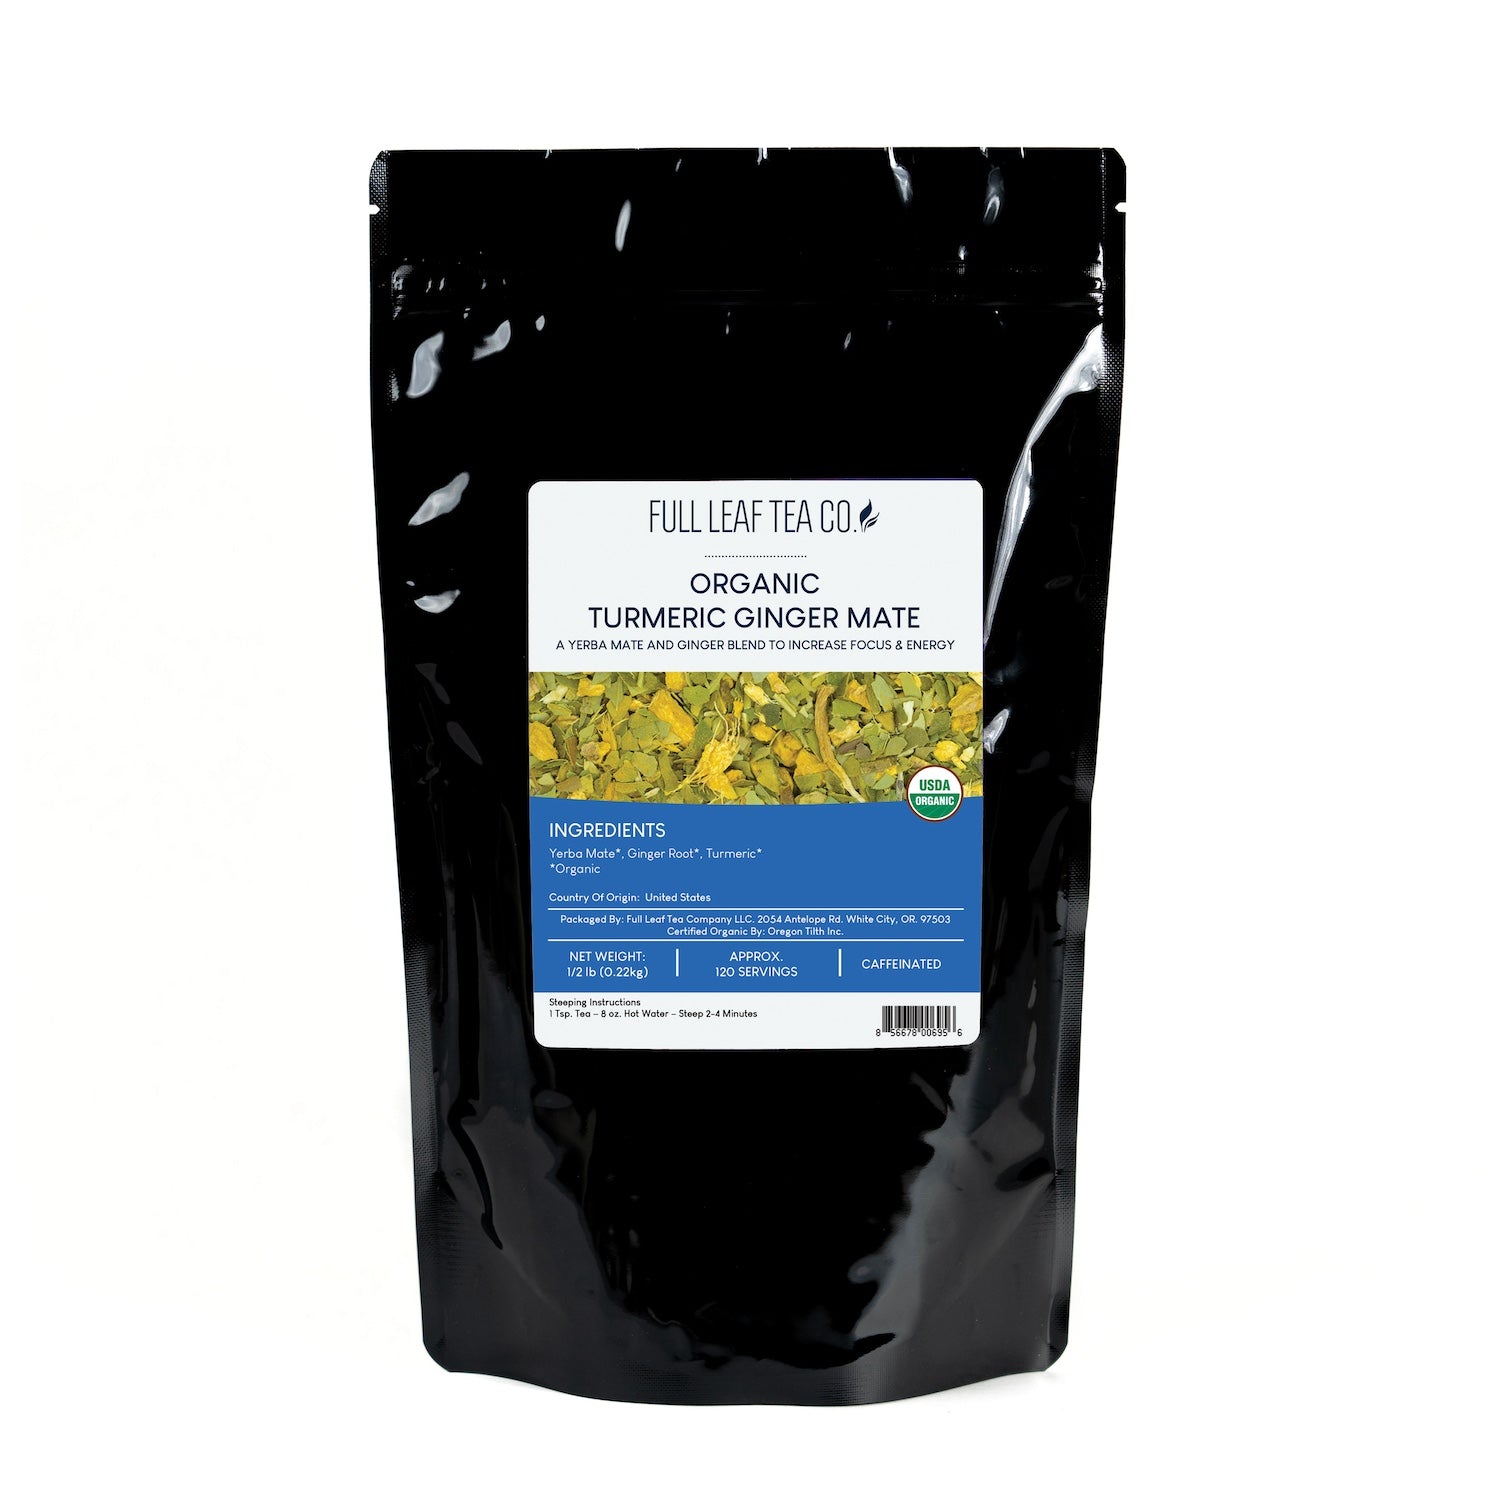 Organic Turmeric Ginger Mate - Loose Leaf Tea - Full Leaf Tea Company